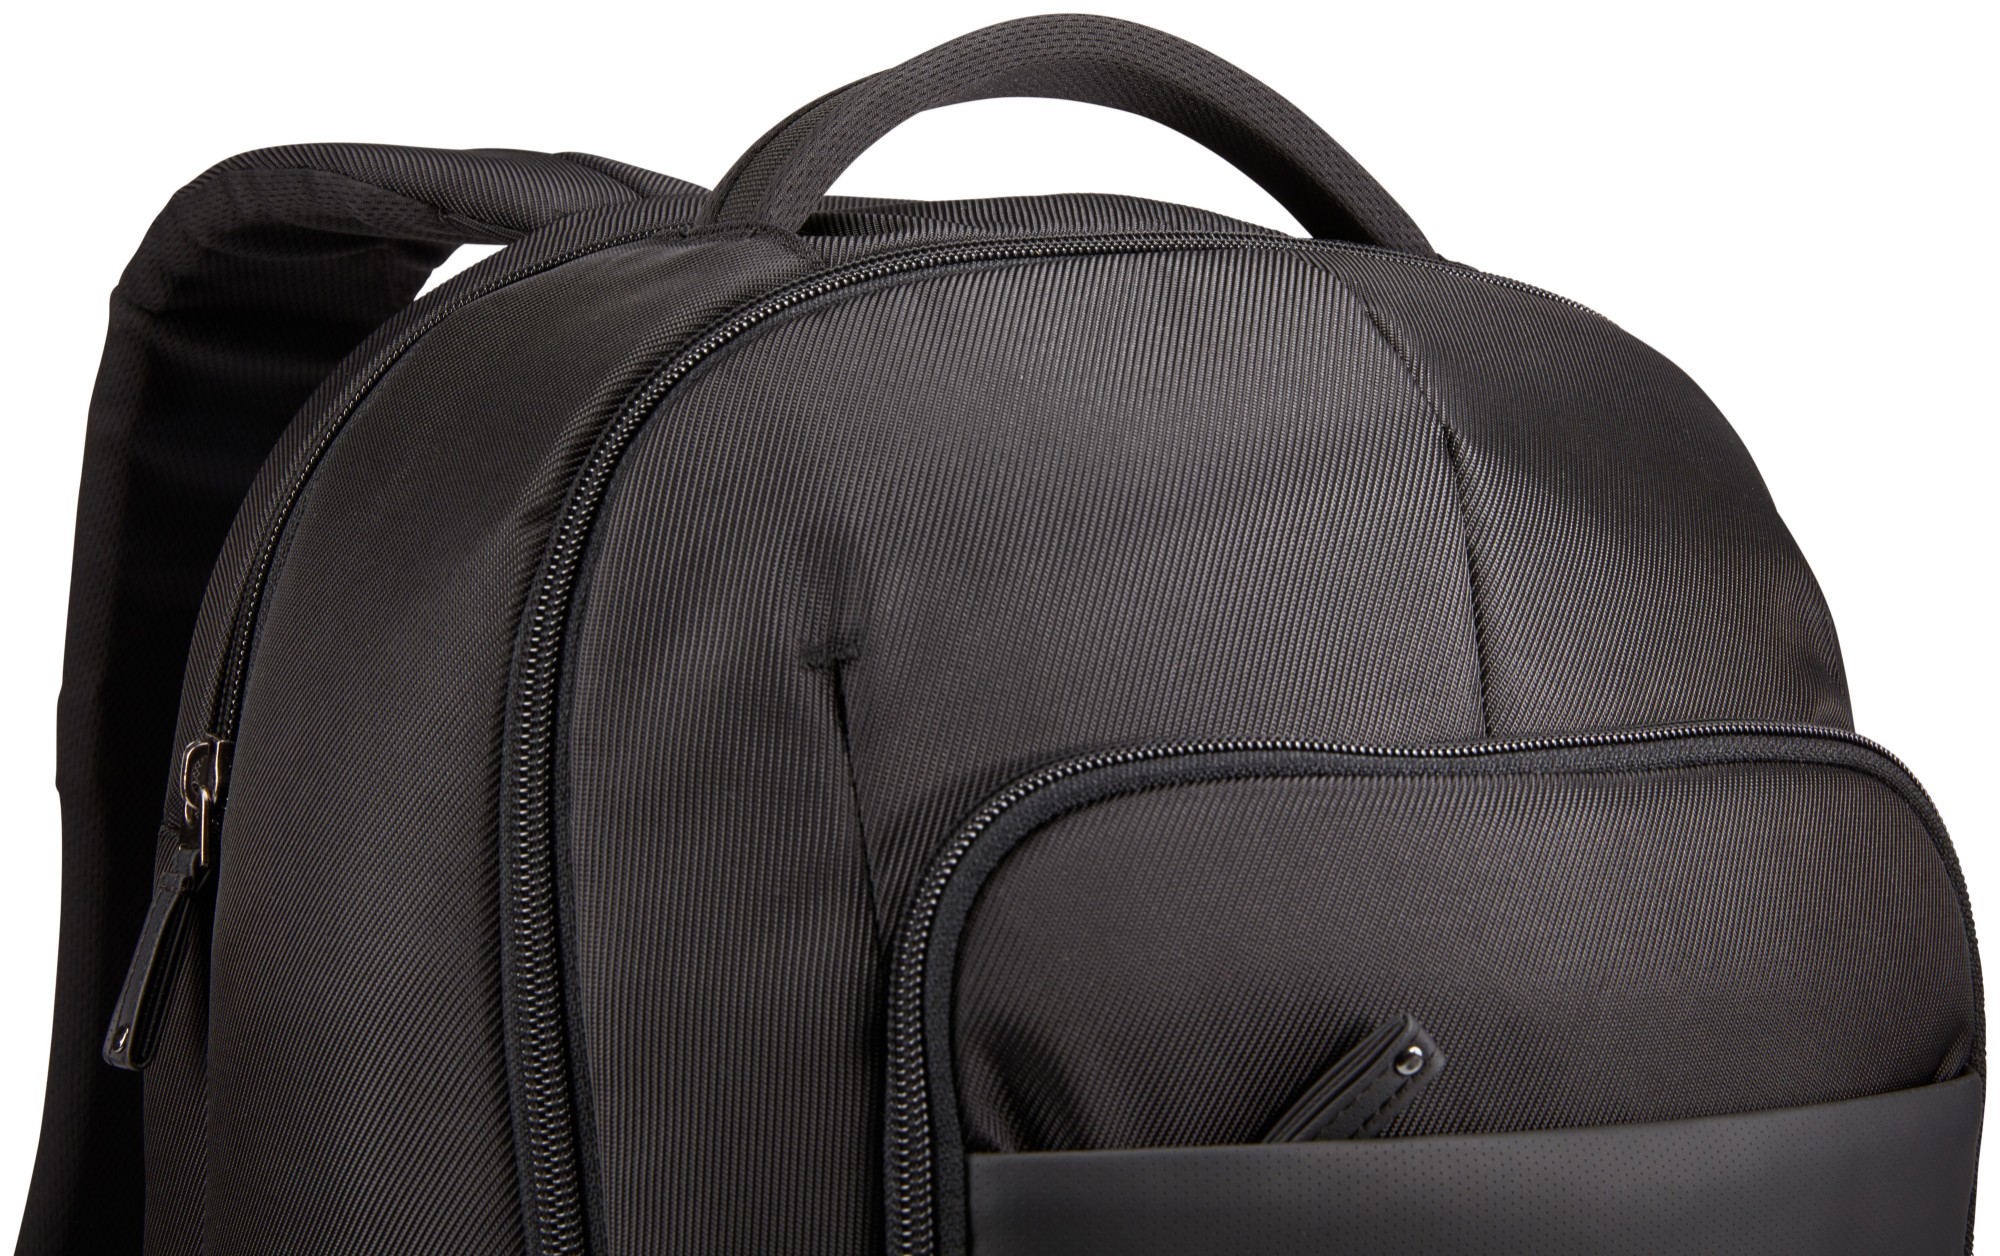 Case Logic Notion NOTIBP-117 Black backpack Nylon